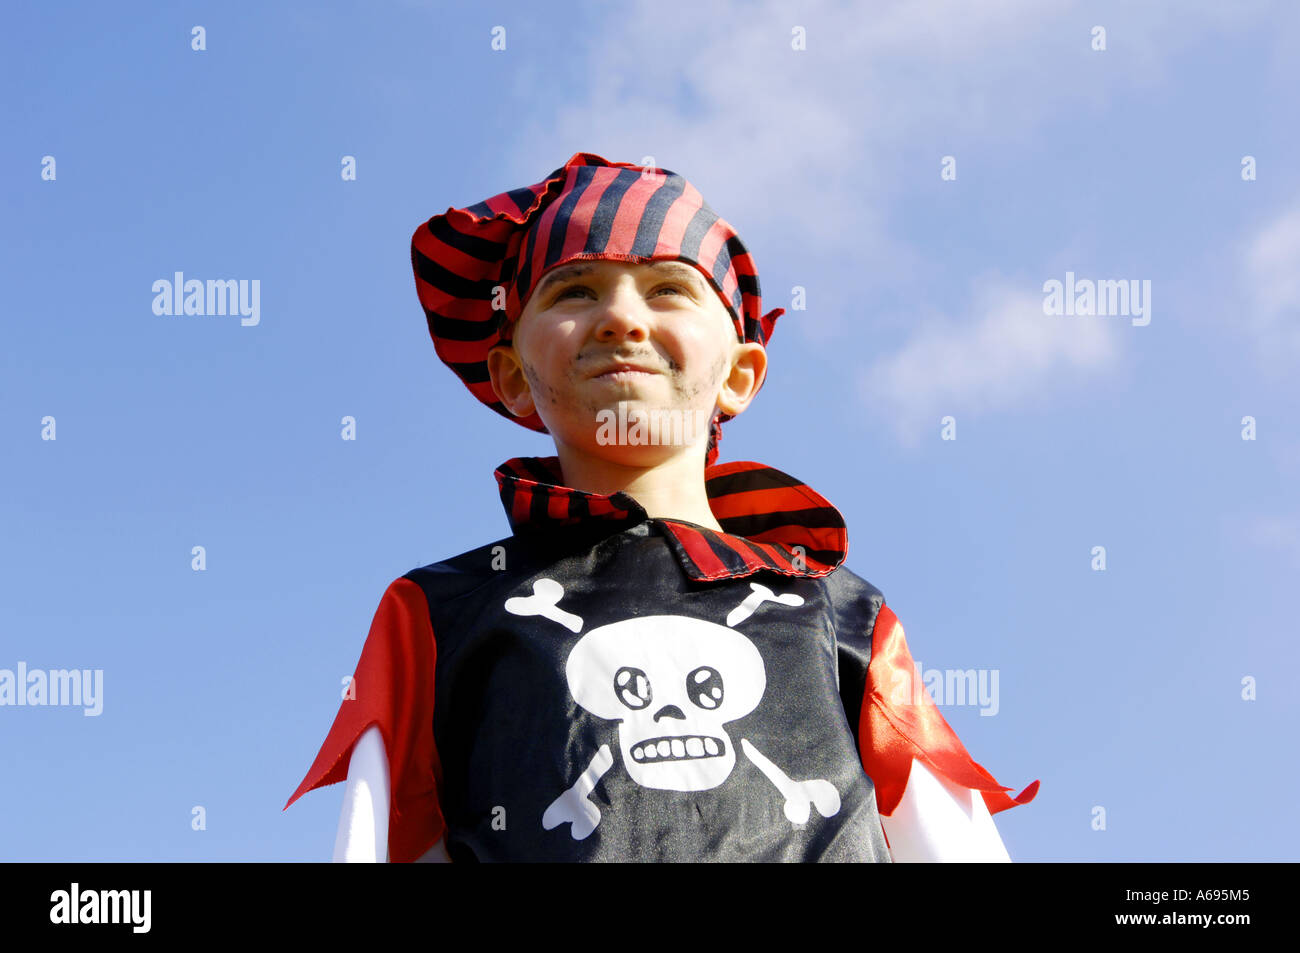 bandana face head portrait pirate expressive red black skull and crossbones  preteen blue sky boy male pose karneval carnival fan Stock Photo - Alamy